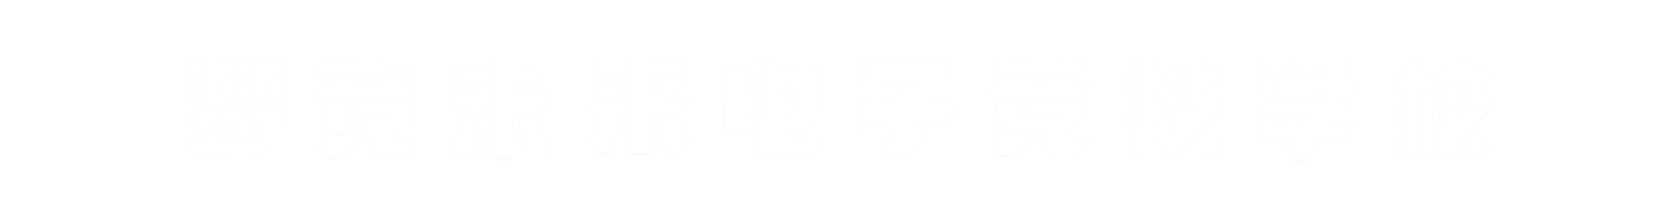 梦竞未来徐州banner字